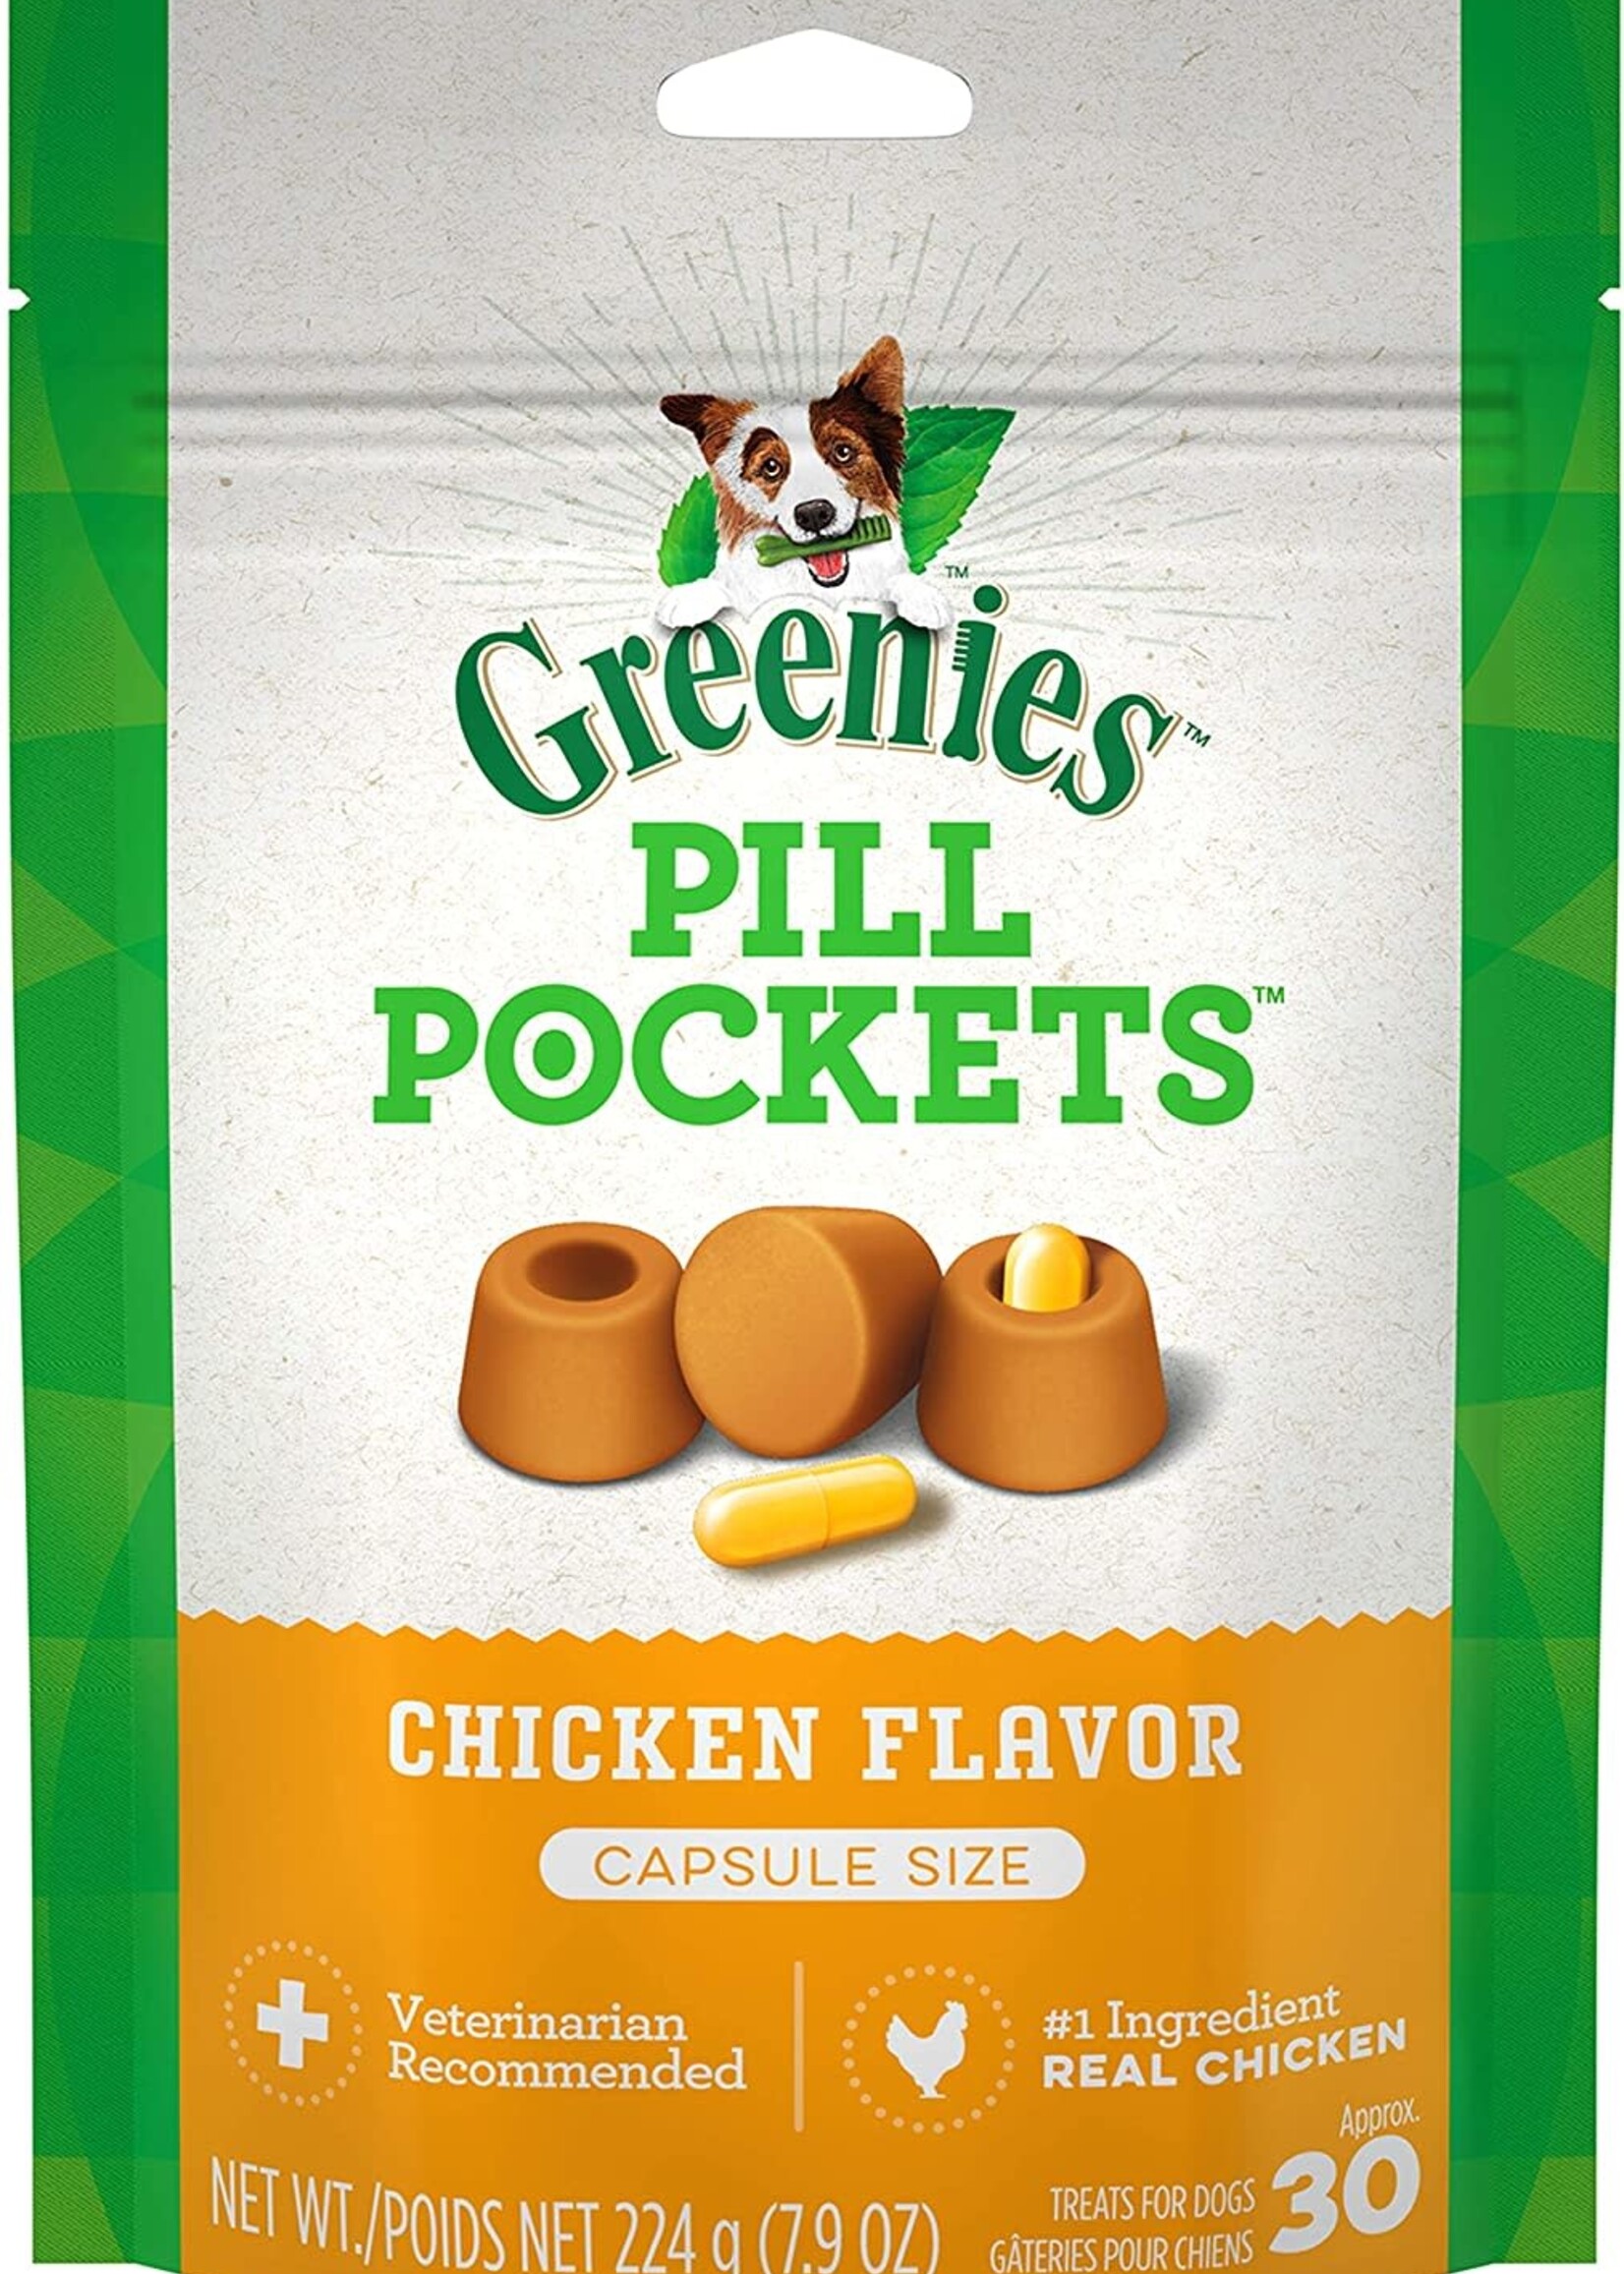 GREENIES GREENIES Pill Pockets Capsule Size Chicken Flavor Dog Treats 7.9-oz